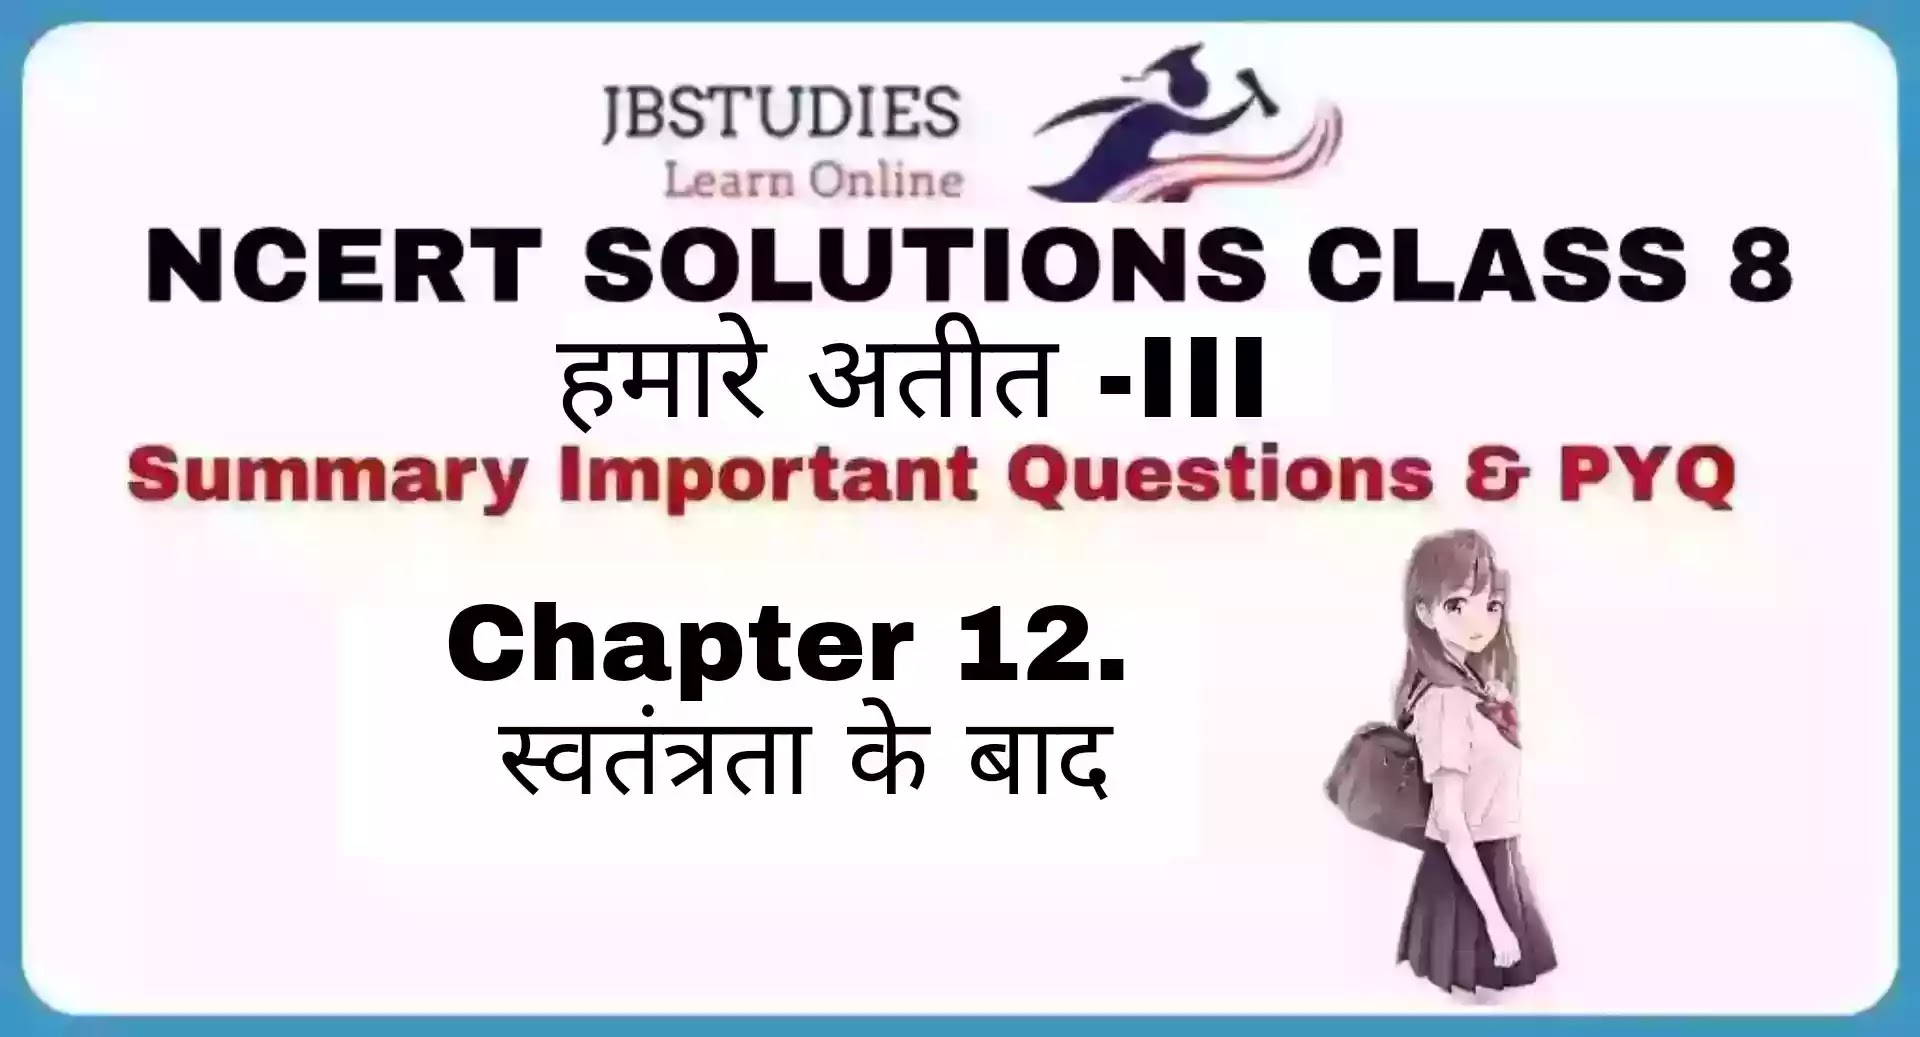 Solutions Class 8 हमारे अतीत -III Chapter-12  (स्वतंत्रता के बाद)